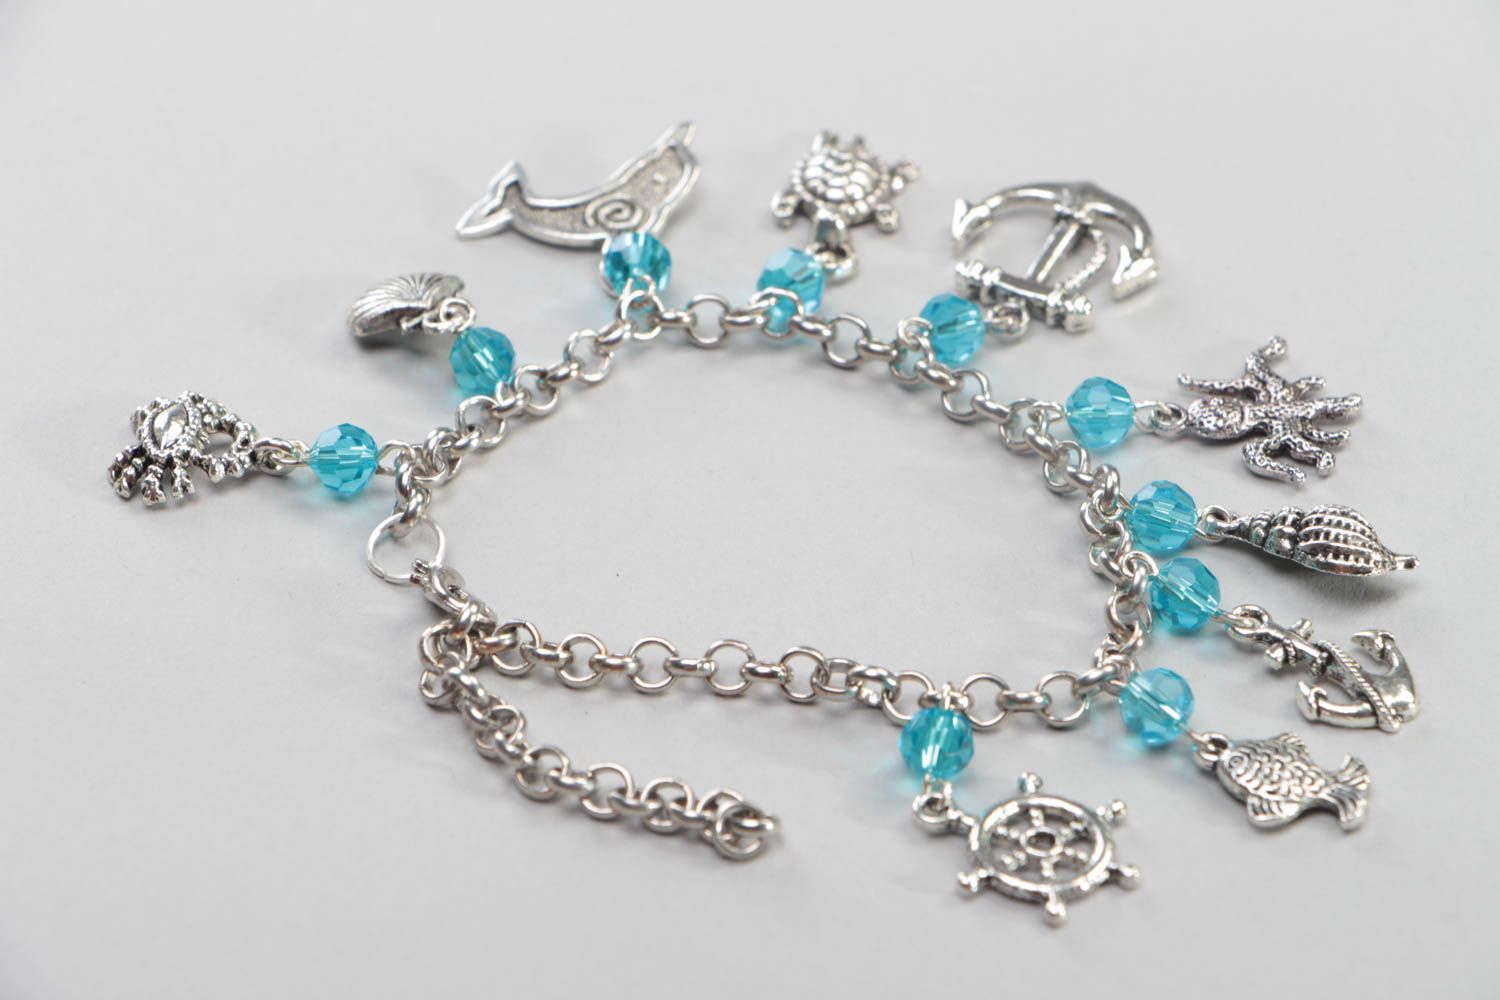 Handmade crystal bracelet accessory with metal charms stylish designer jewelry photo 4